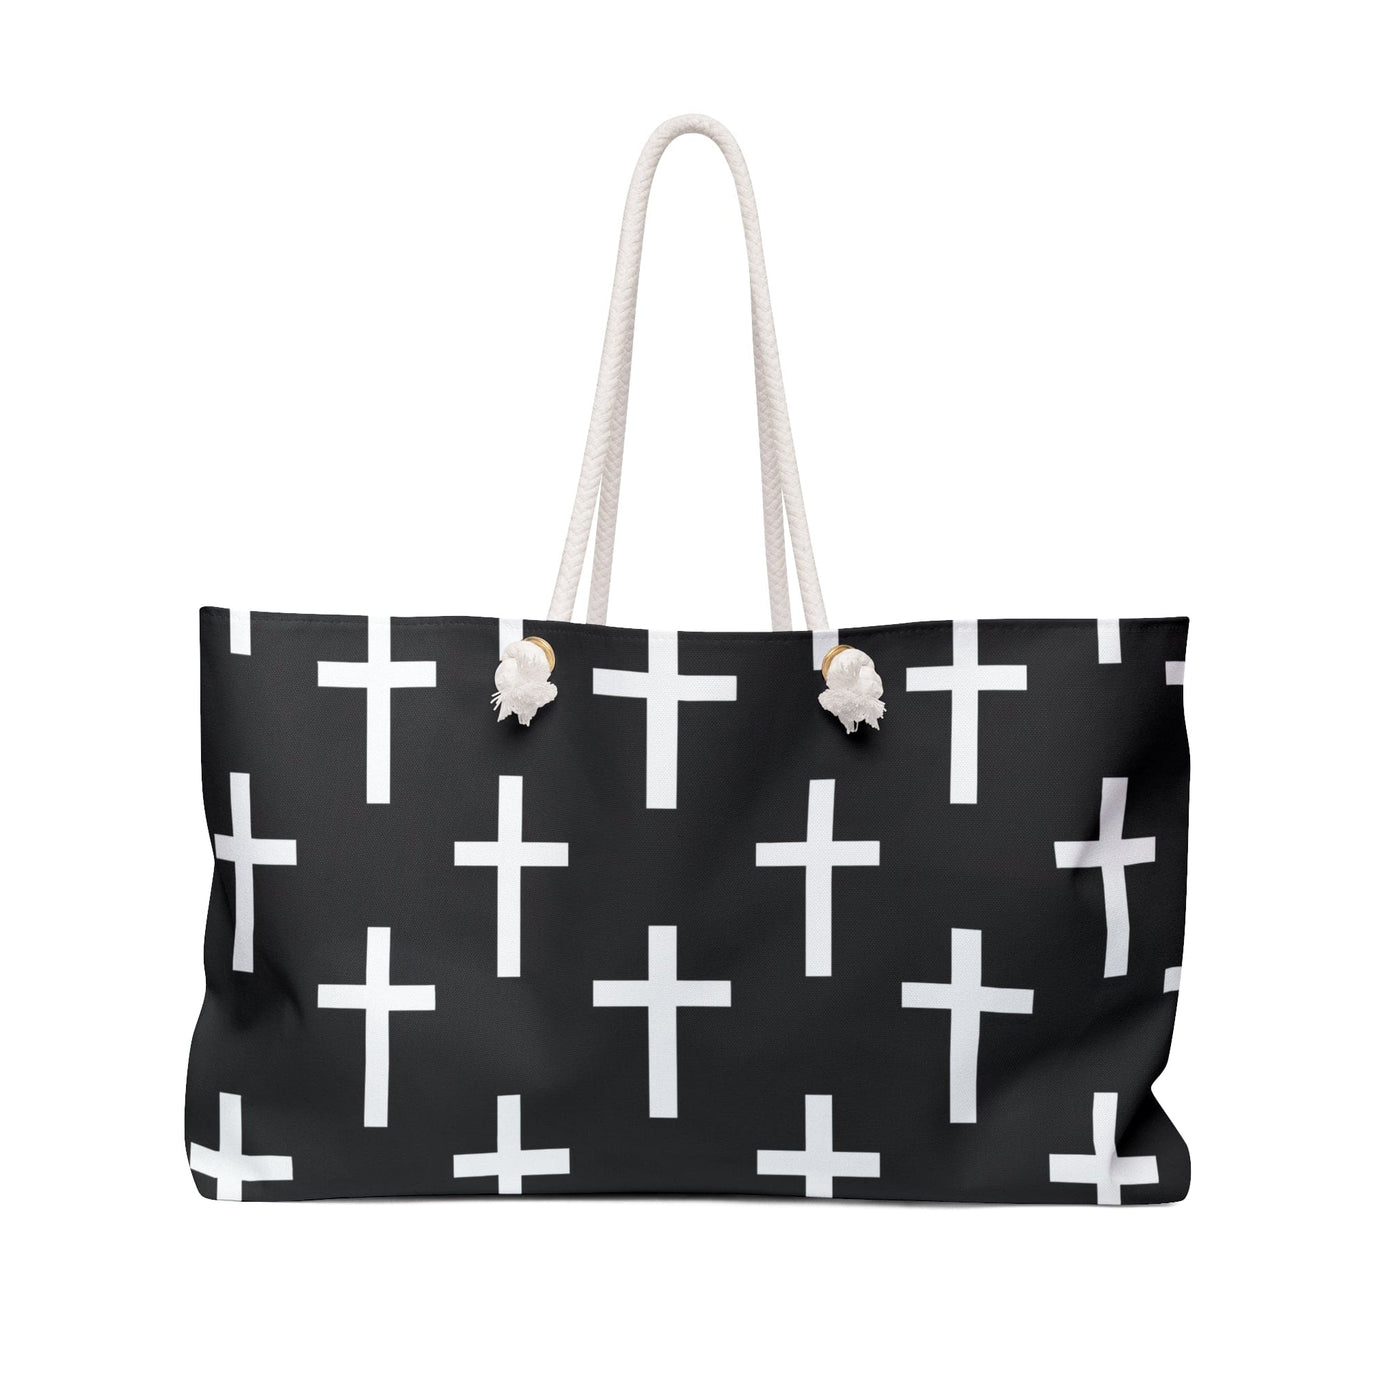 Weekender Tote Bag Black And White Seamless Cross Pattern - Bags | Tote Bags